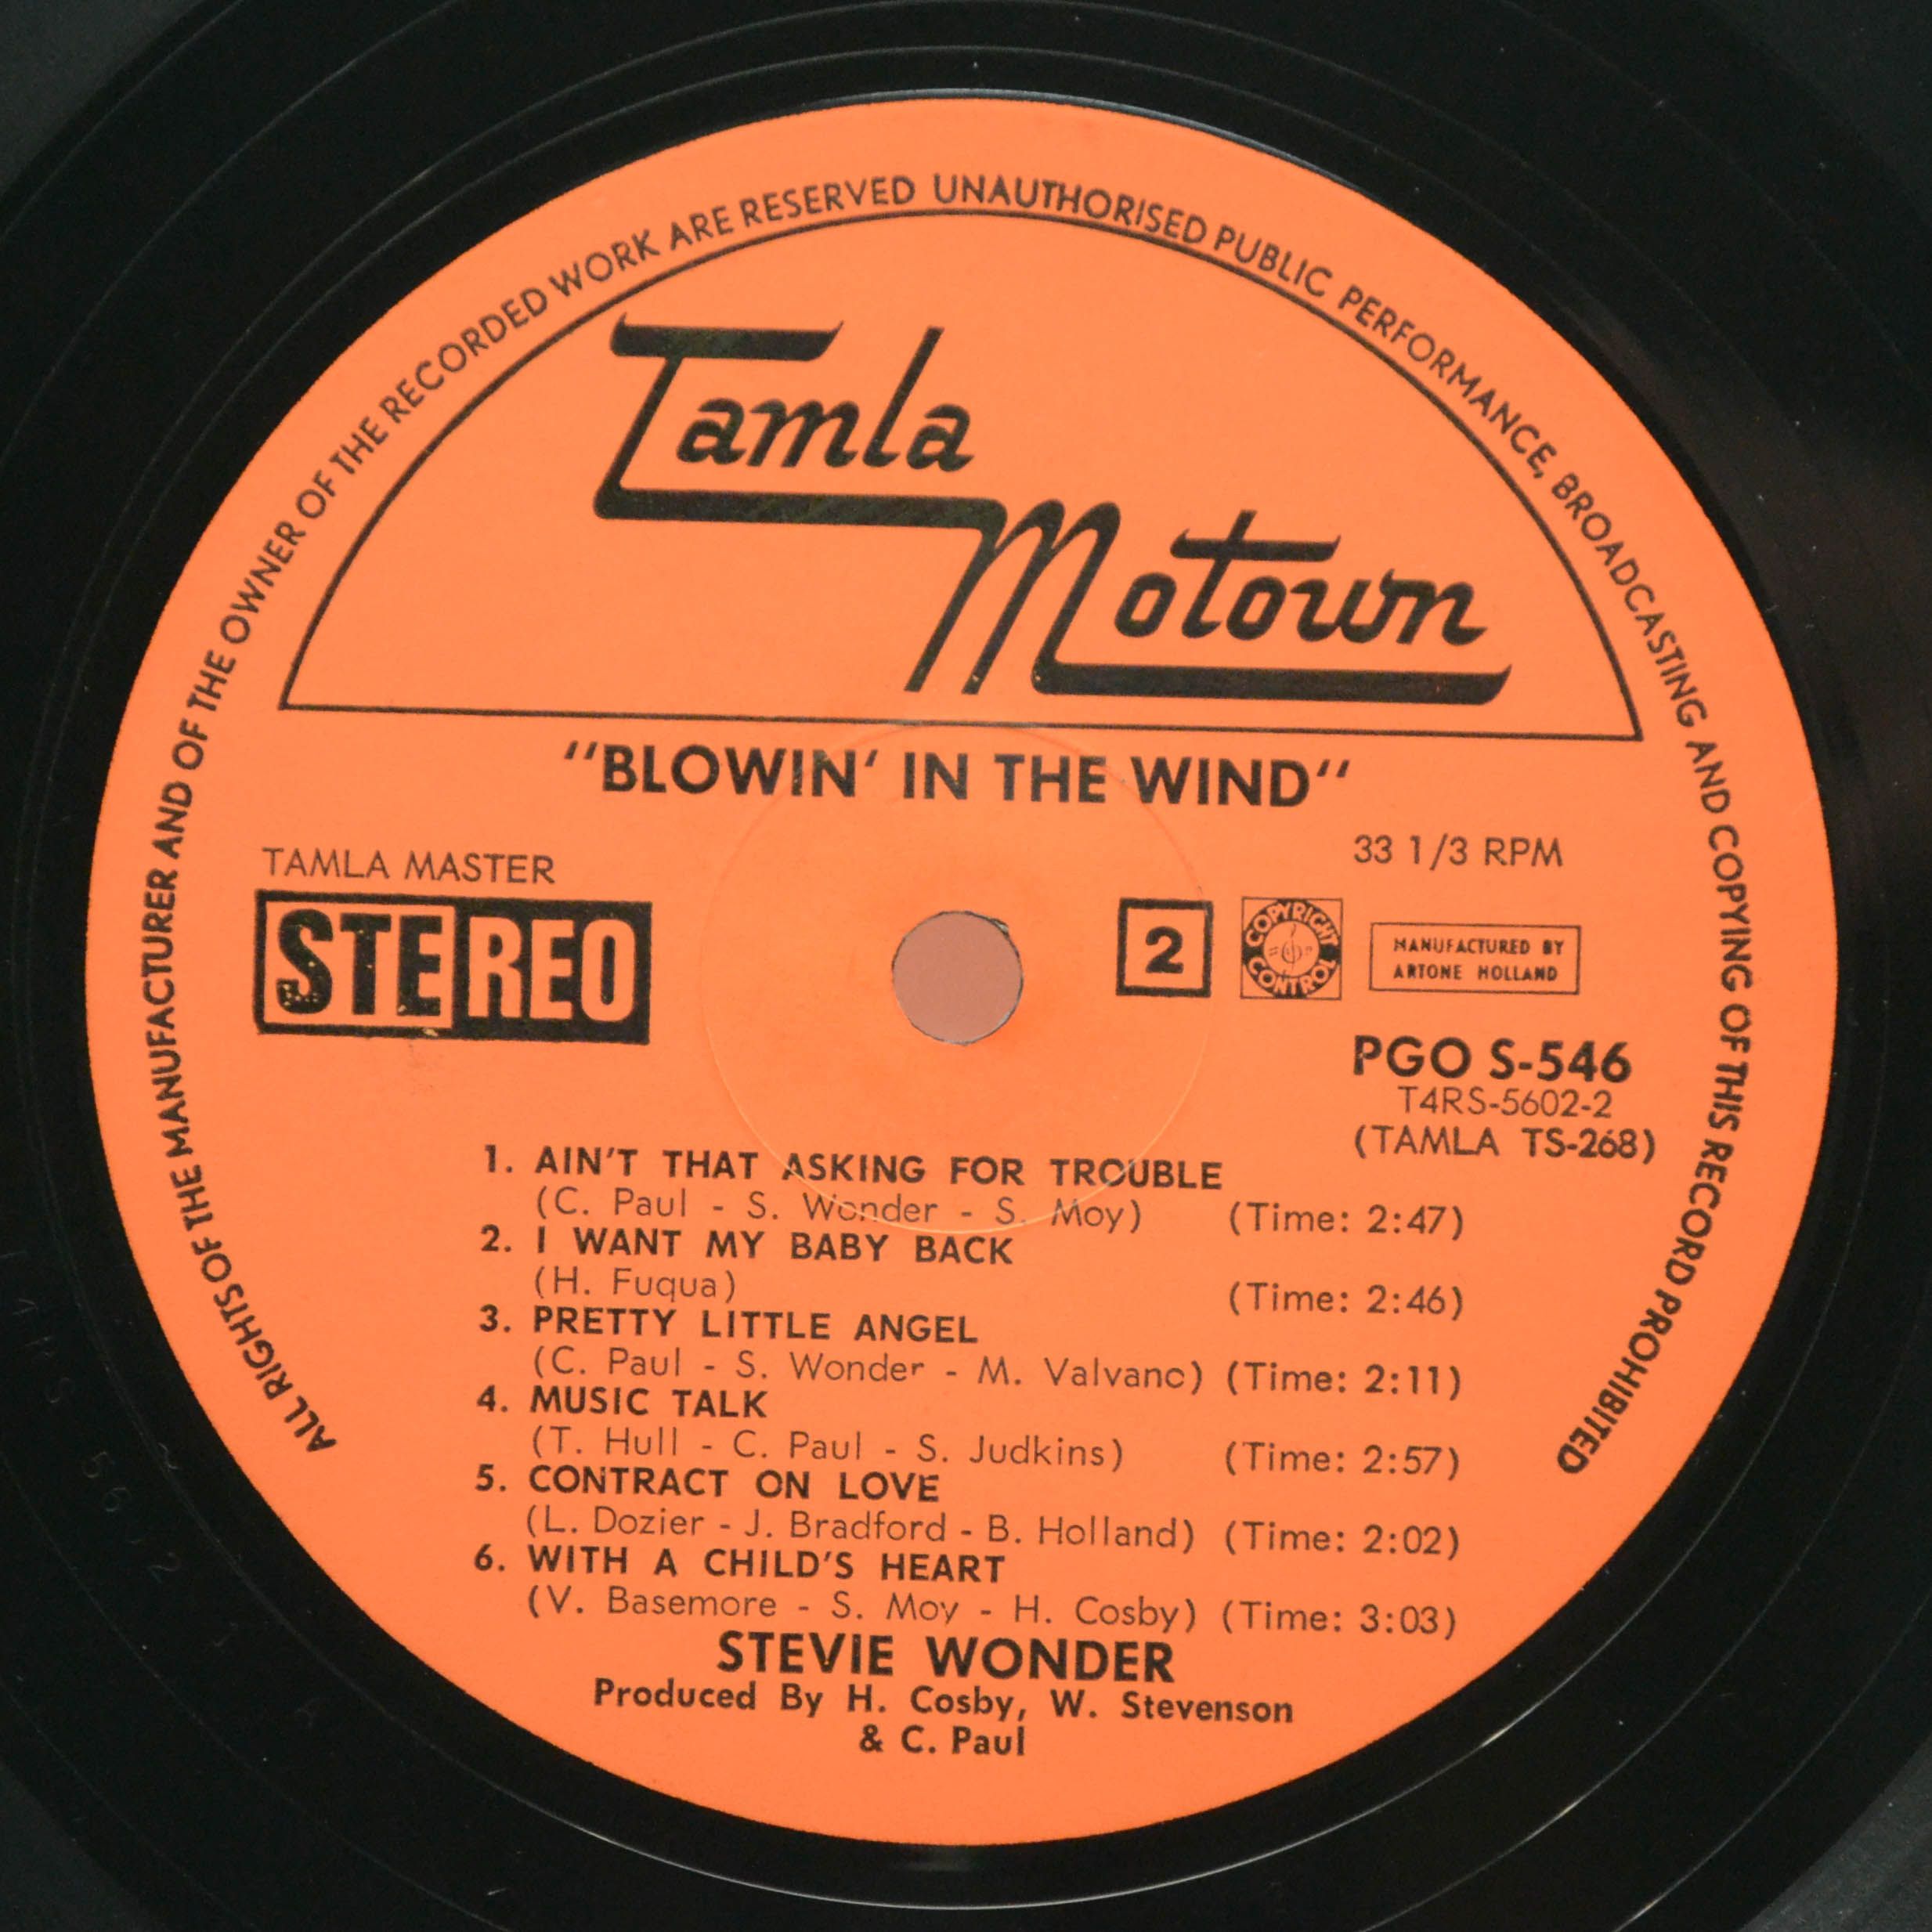 Stevie Wonder — Blowin' In The Wind, 1966